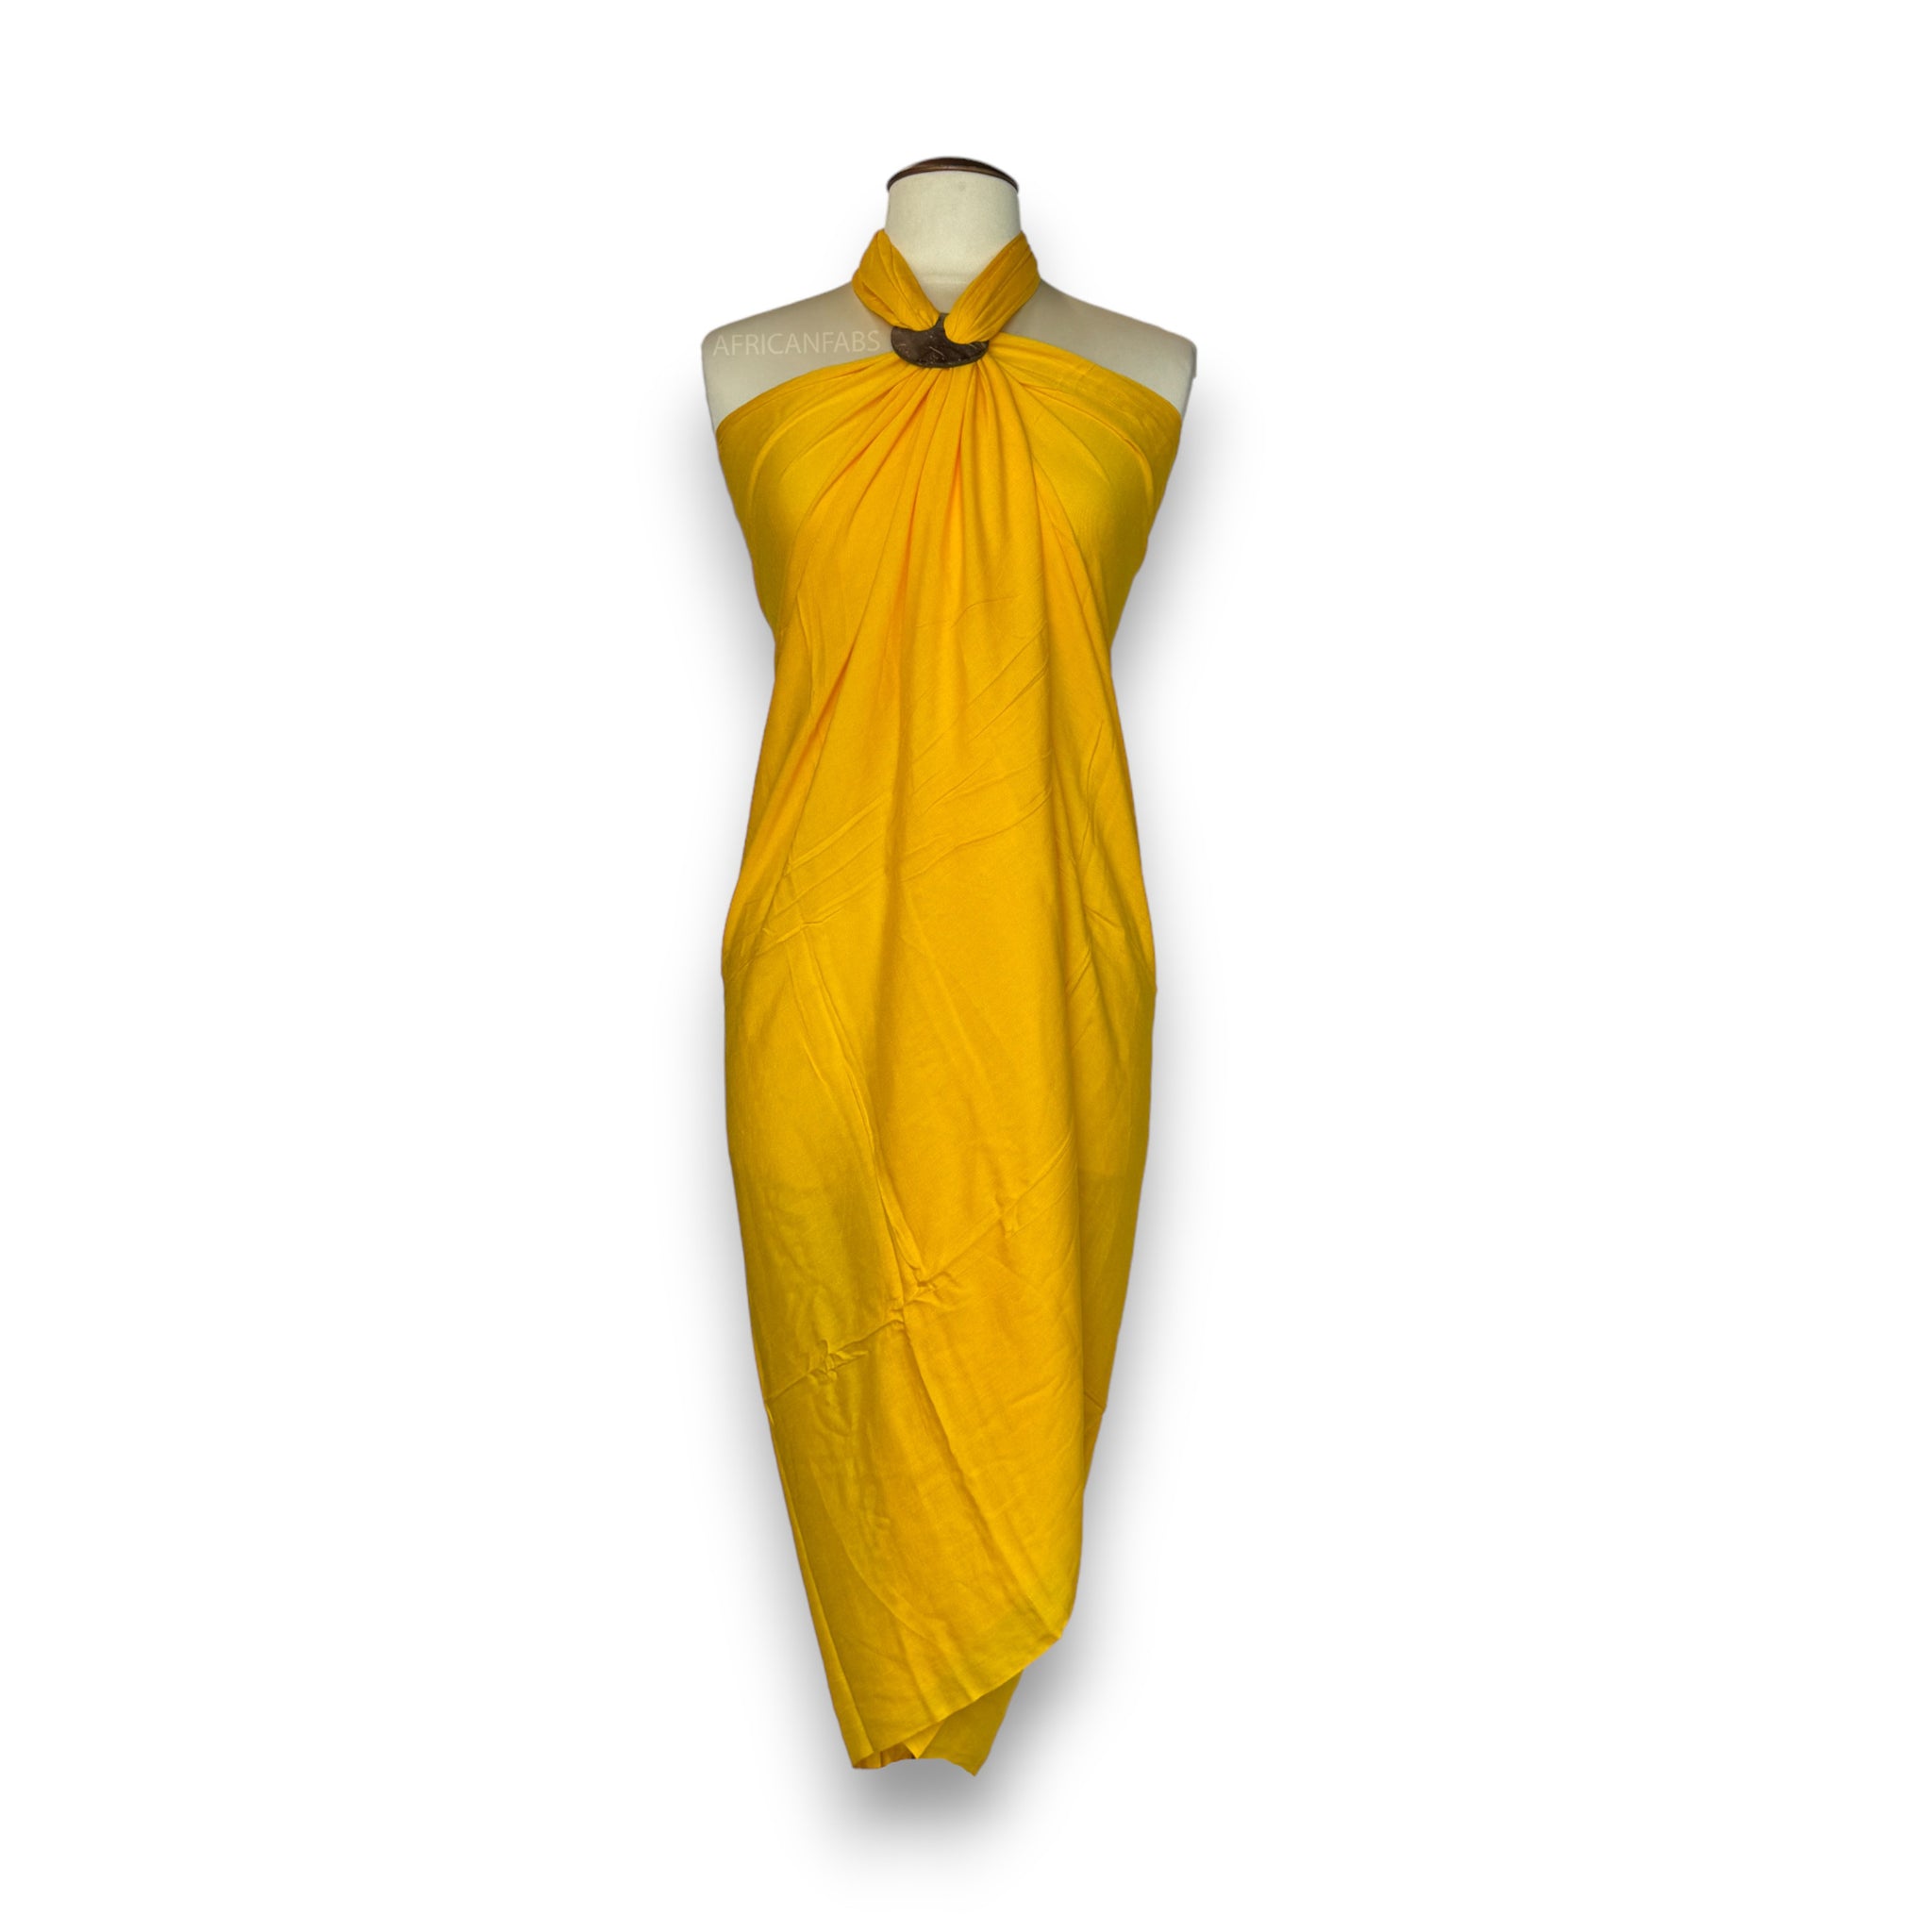 Sarong / pareo - Beachwear wrap skirt - Yellow